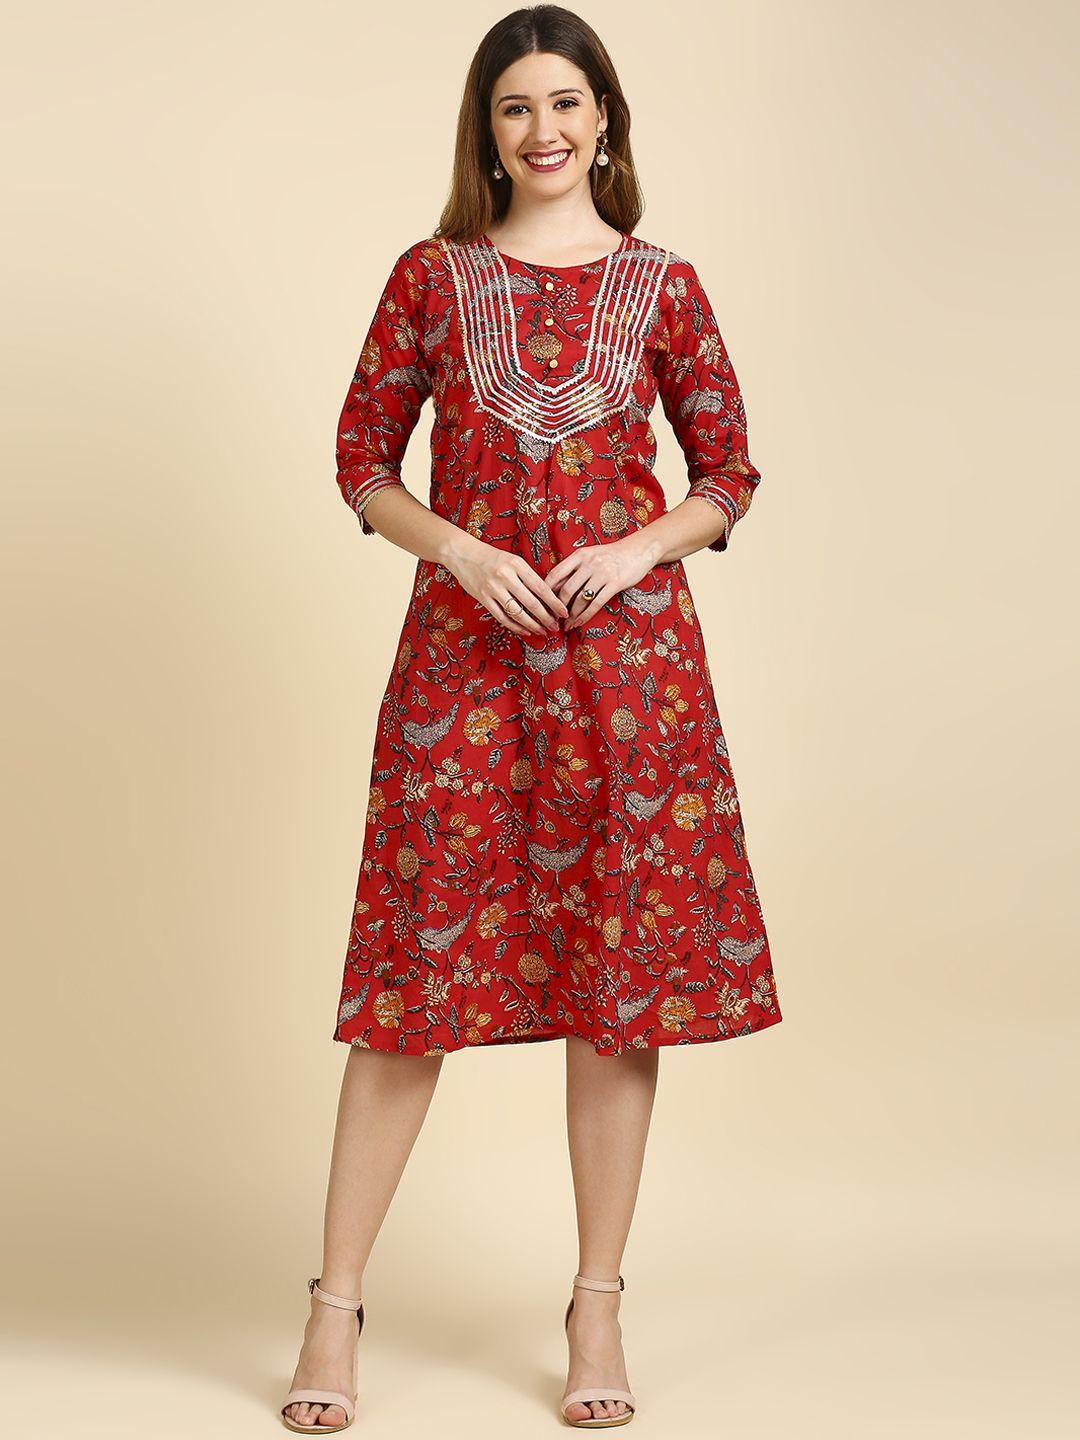 anubhutee red ethnic motifs a-line midi dress